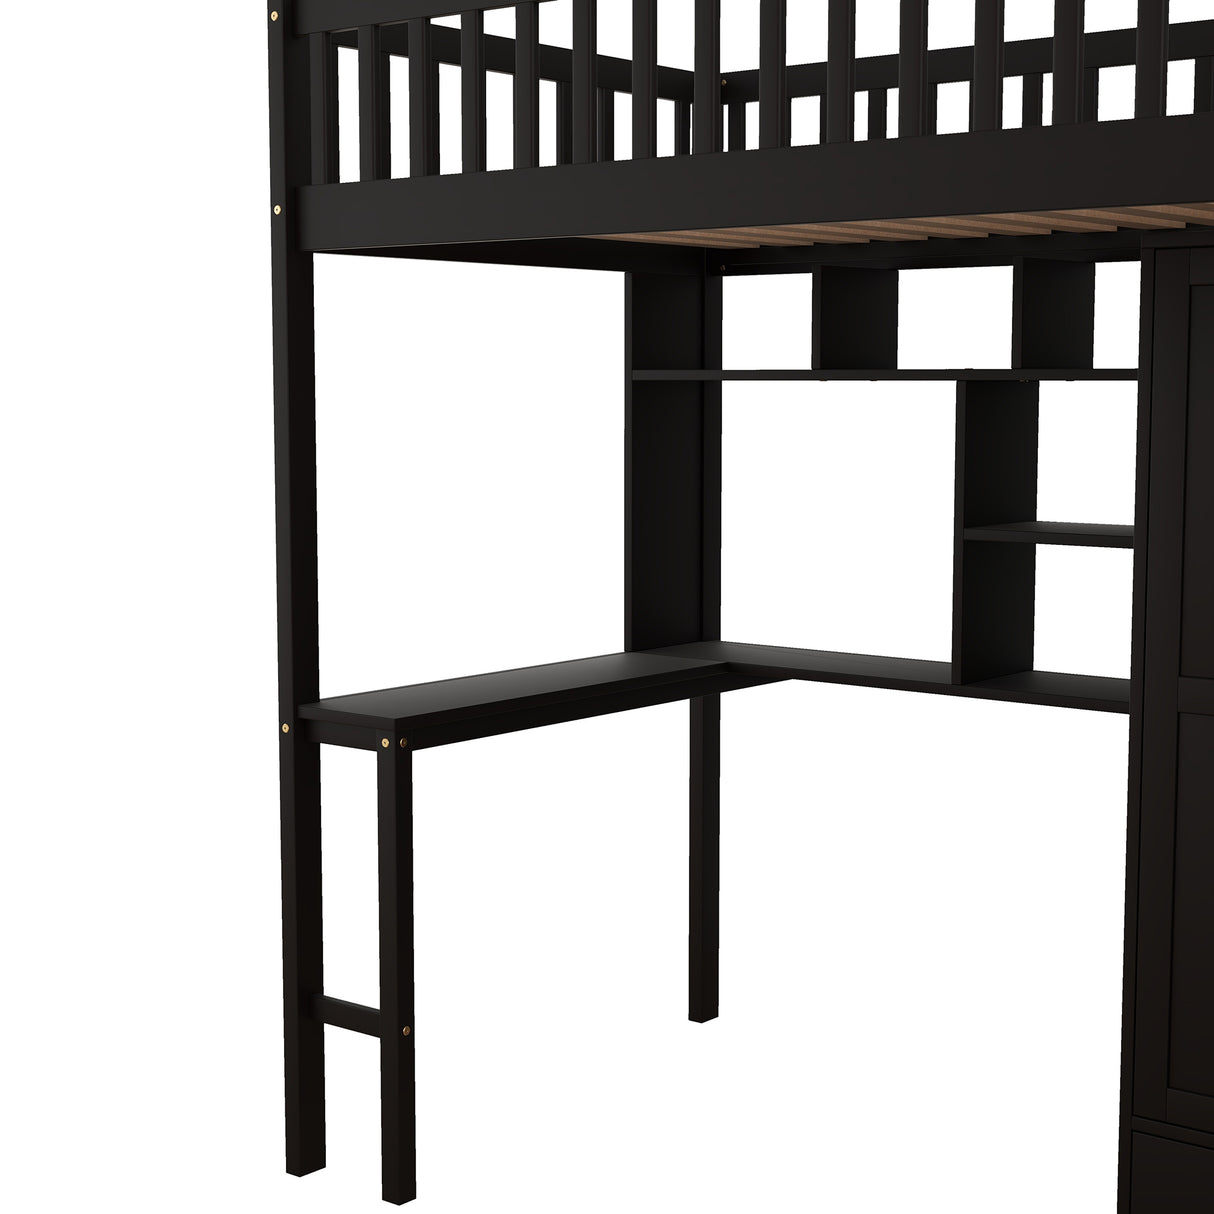 Twin size Loft Bed with Bookshelf,Drawers,Desk,and Wardrobe-Espresso - Home Elegance USA